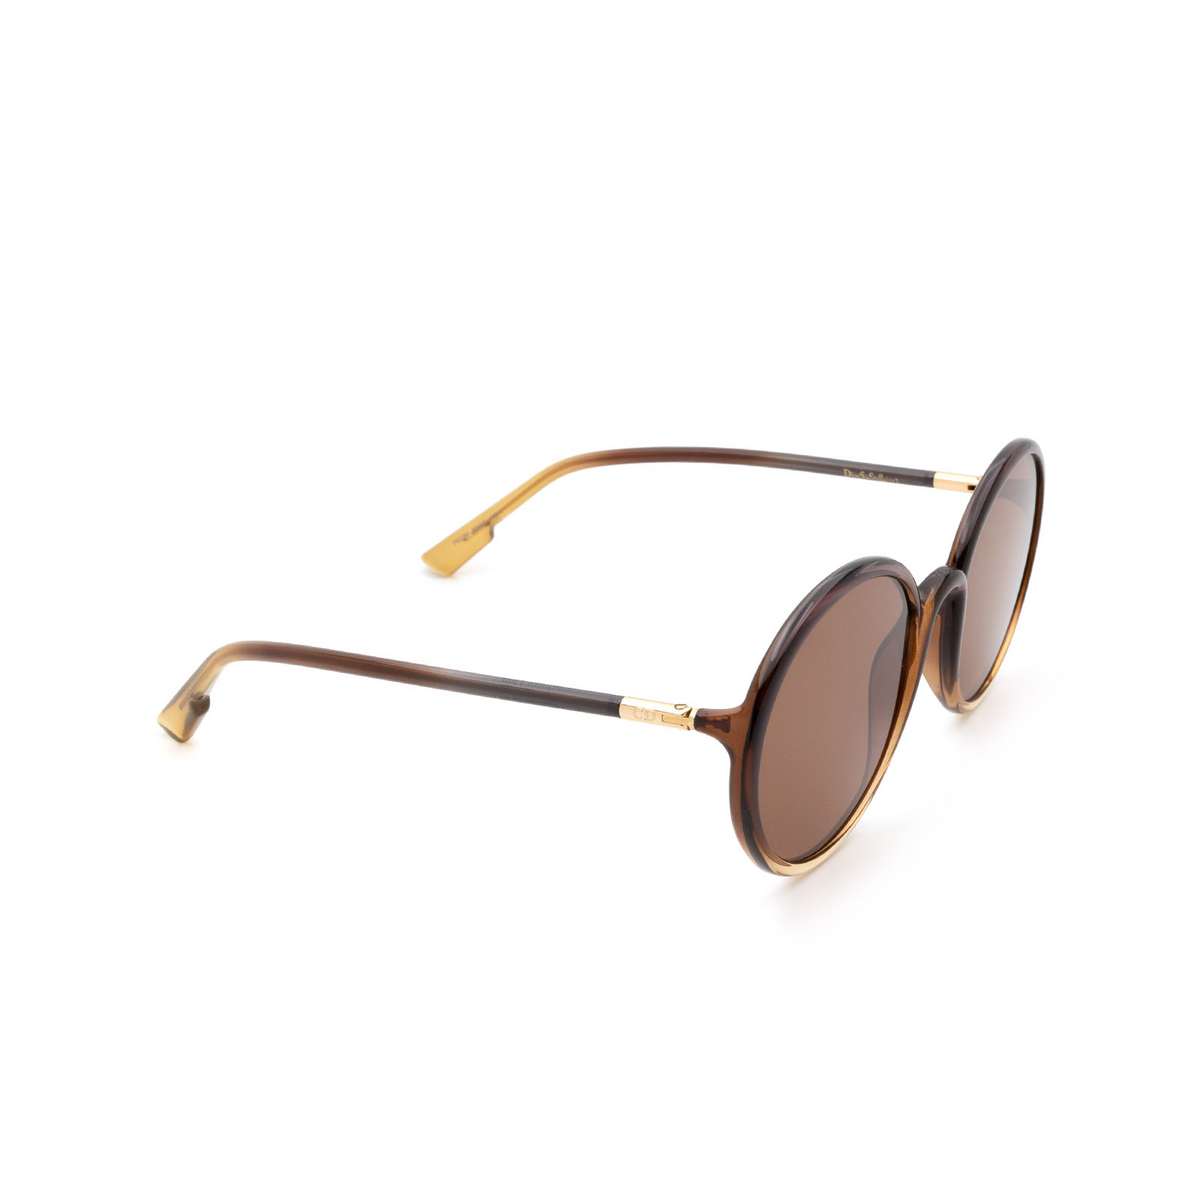 Dior® Round Sunglasses: SOSTELLAIRE2 color Grey Multicolor P6Q/2M - three-quarters view.